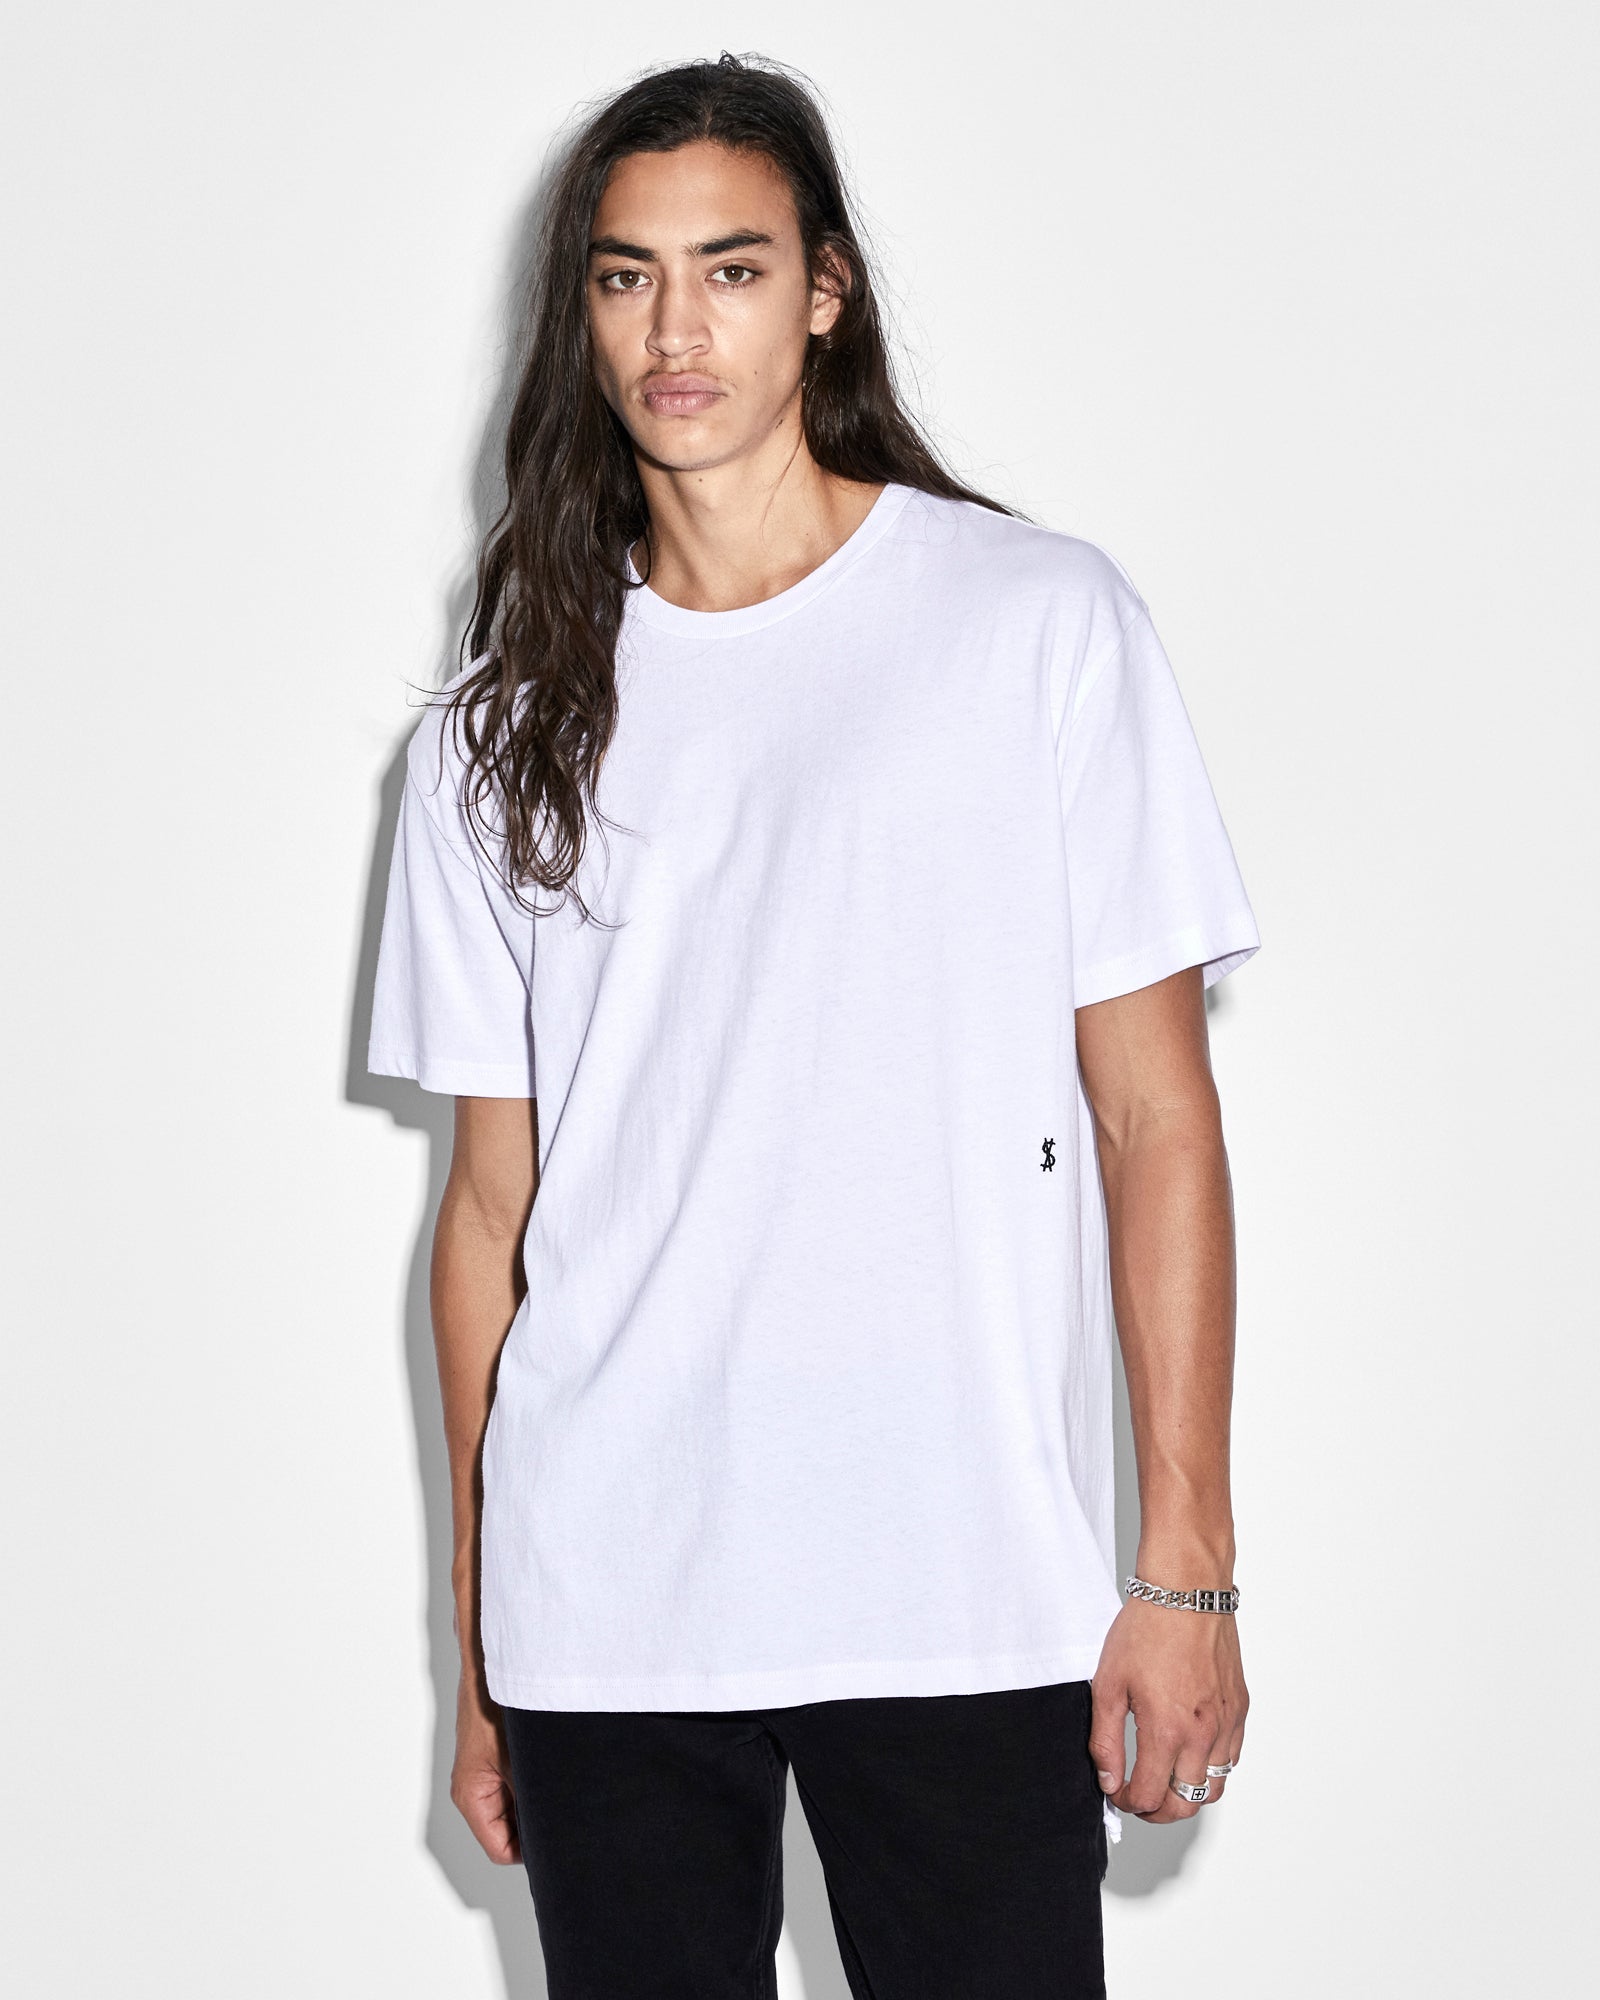 Shop Men's T-shirts, White Shirts & Printed Shirts, Ksubi